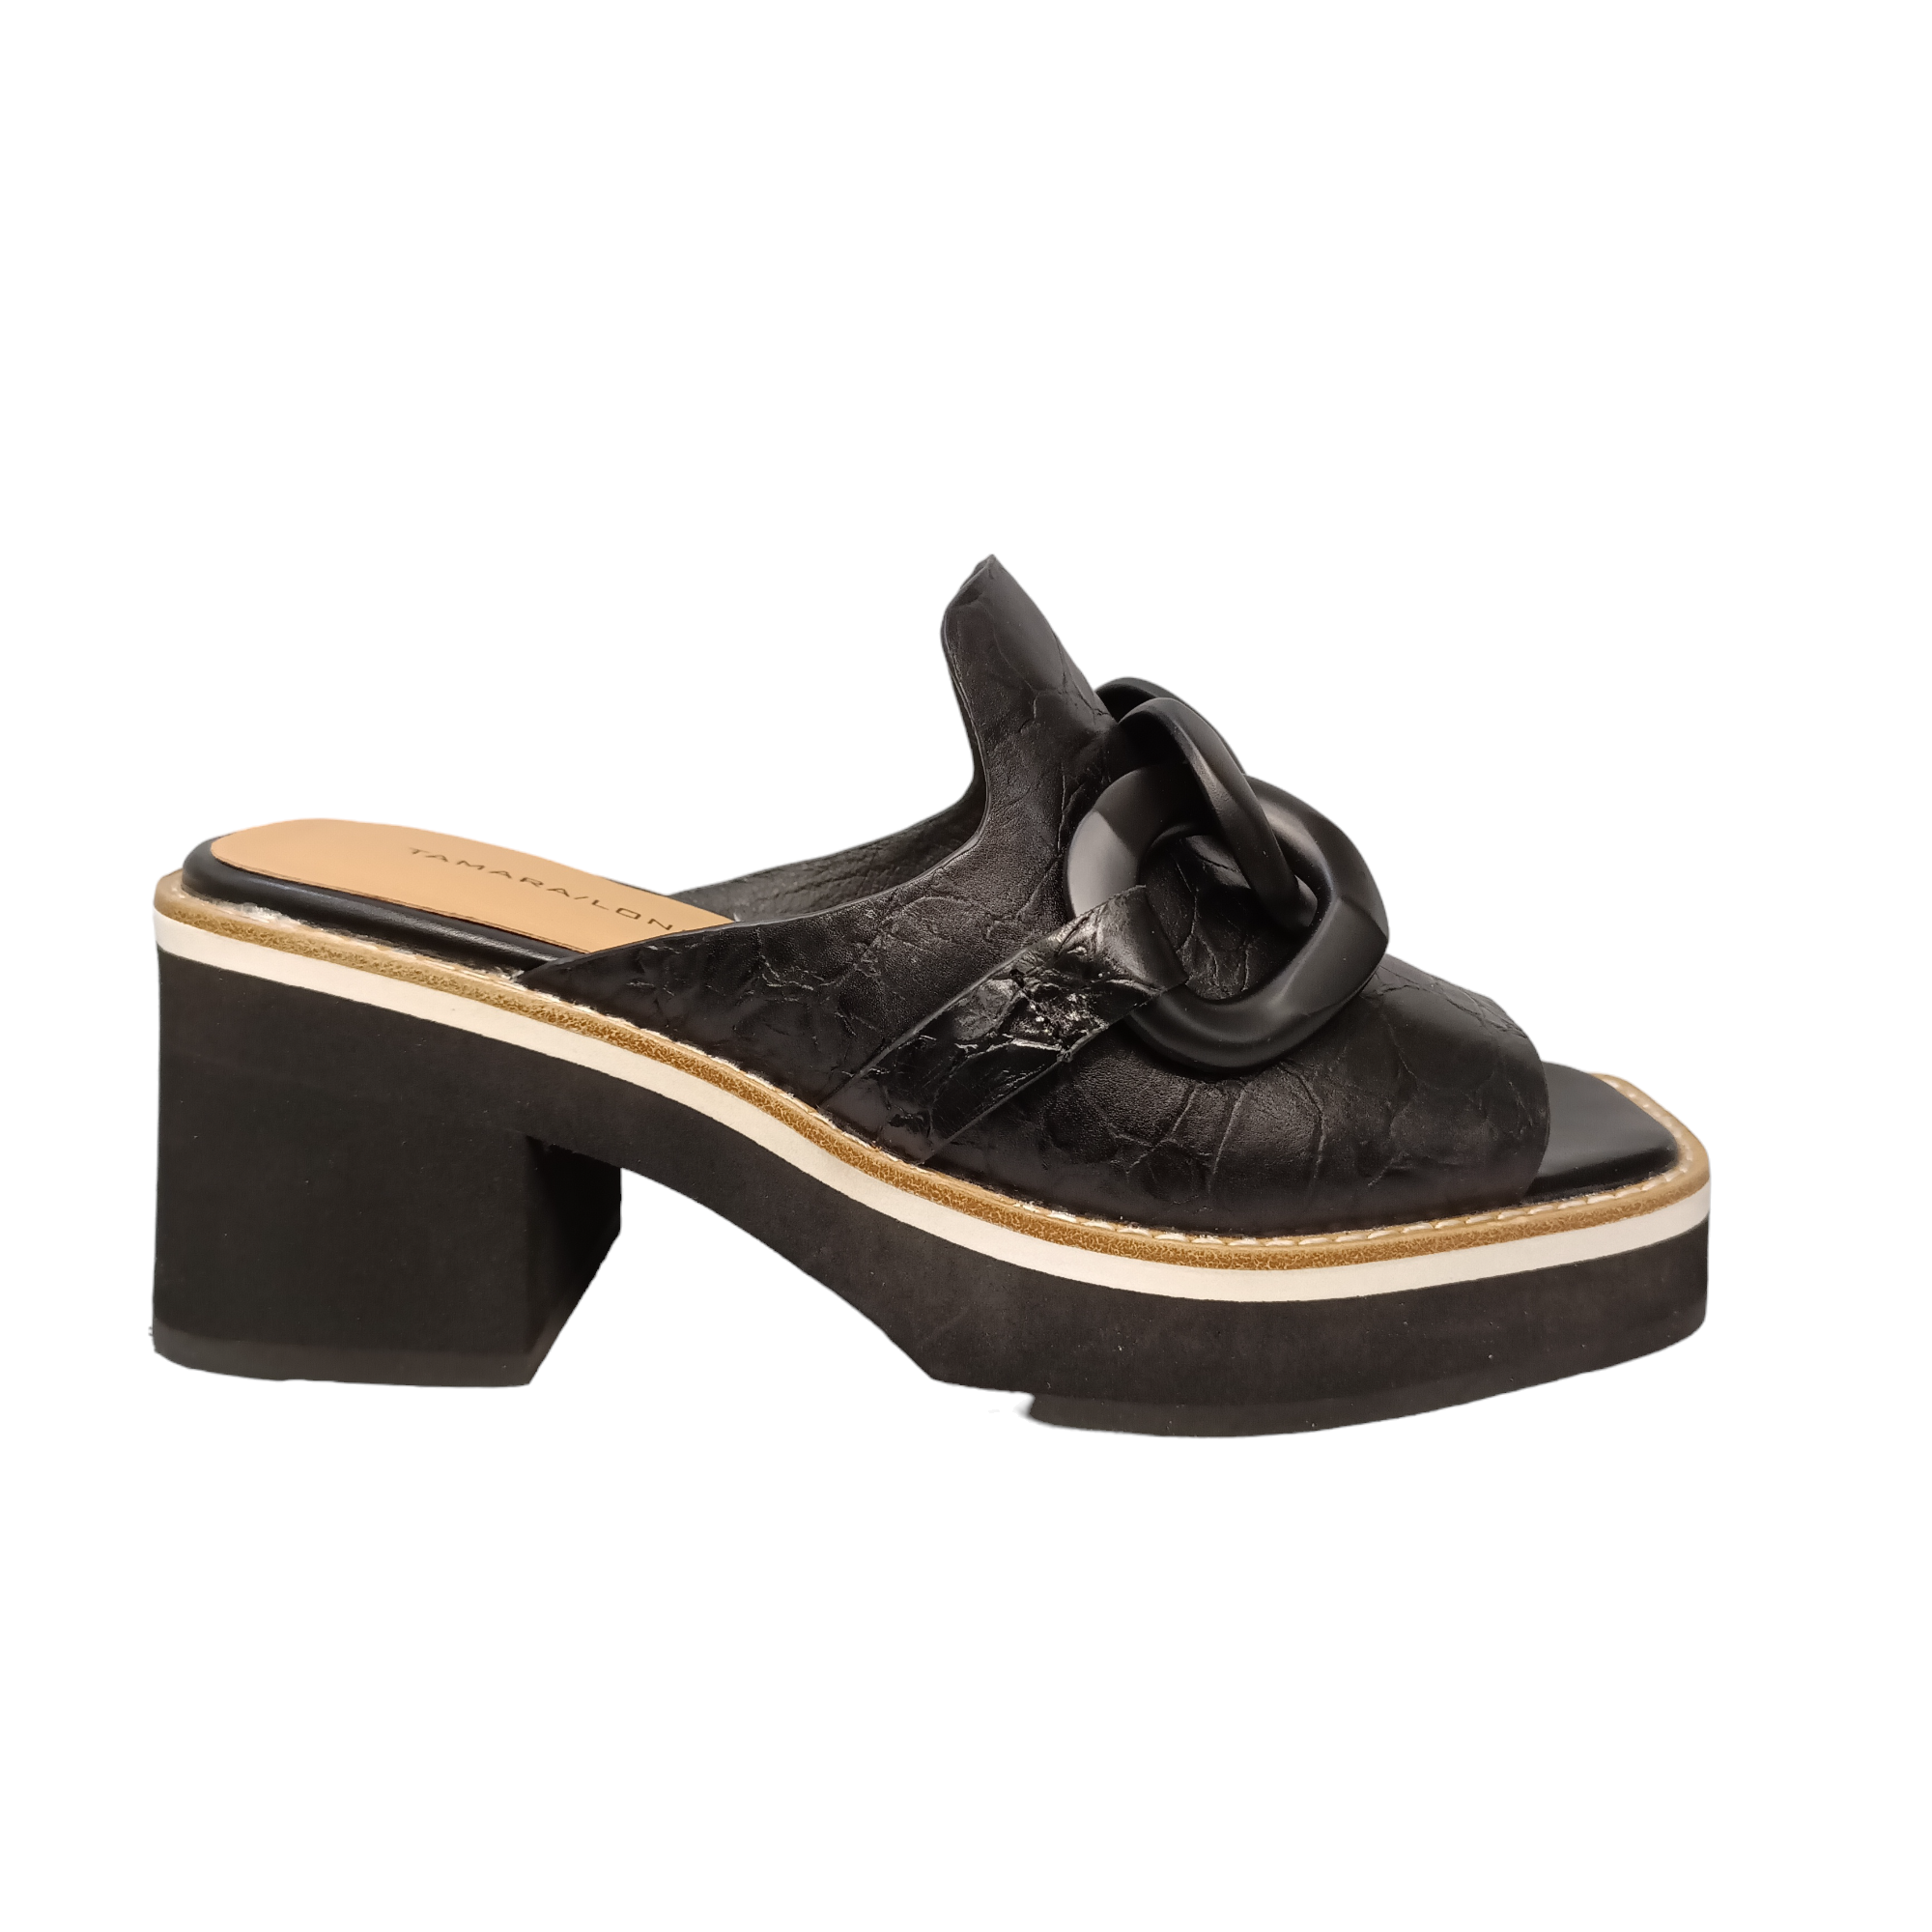 Balmy - shoe&me - Tamara - Slide - Heels, Slides/Scuffs, Summer, Womens